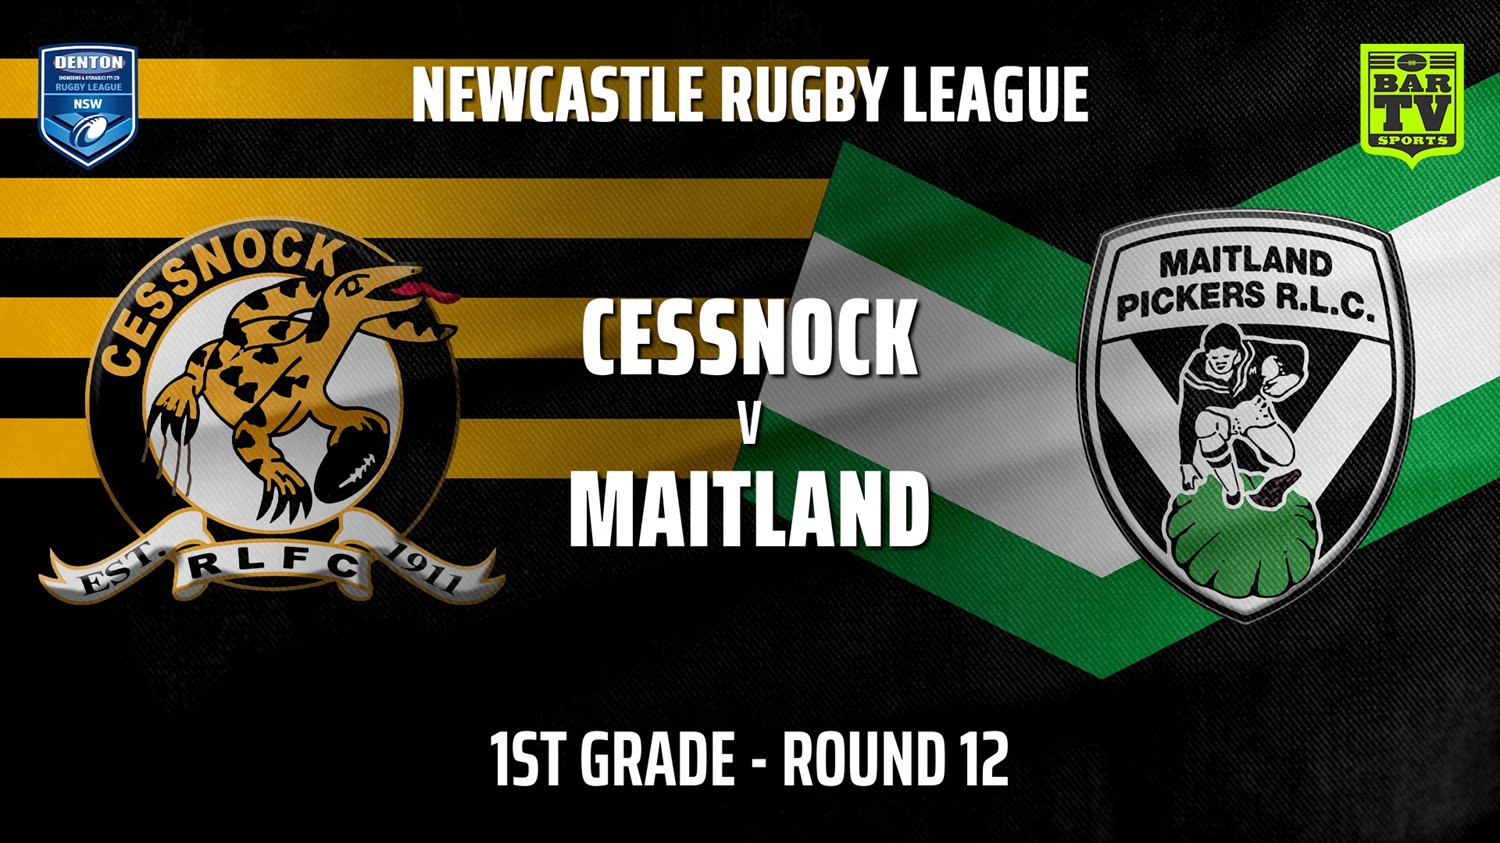 210619-Newcastle Round 12 - 1st Grade - Cessnock Goannas v Maitland Pickers Minigame Slate Image